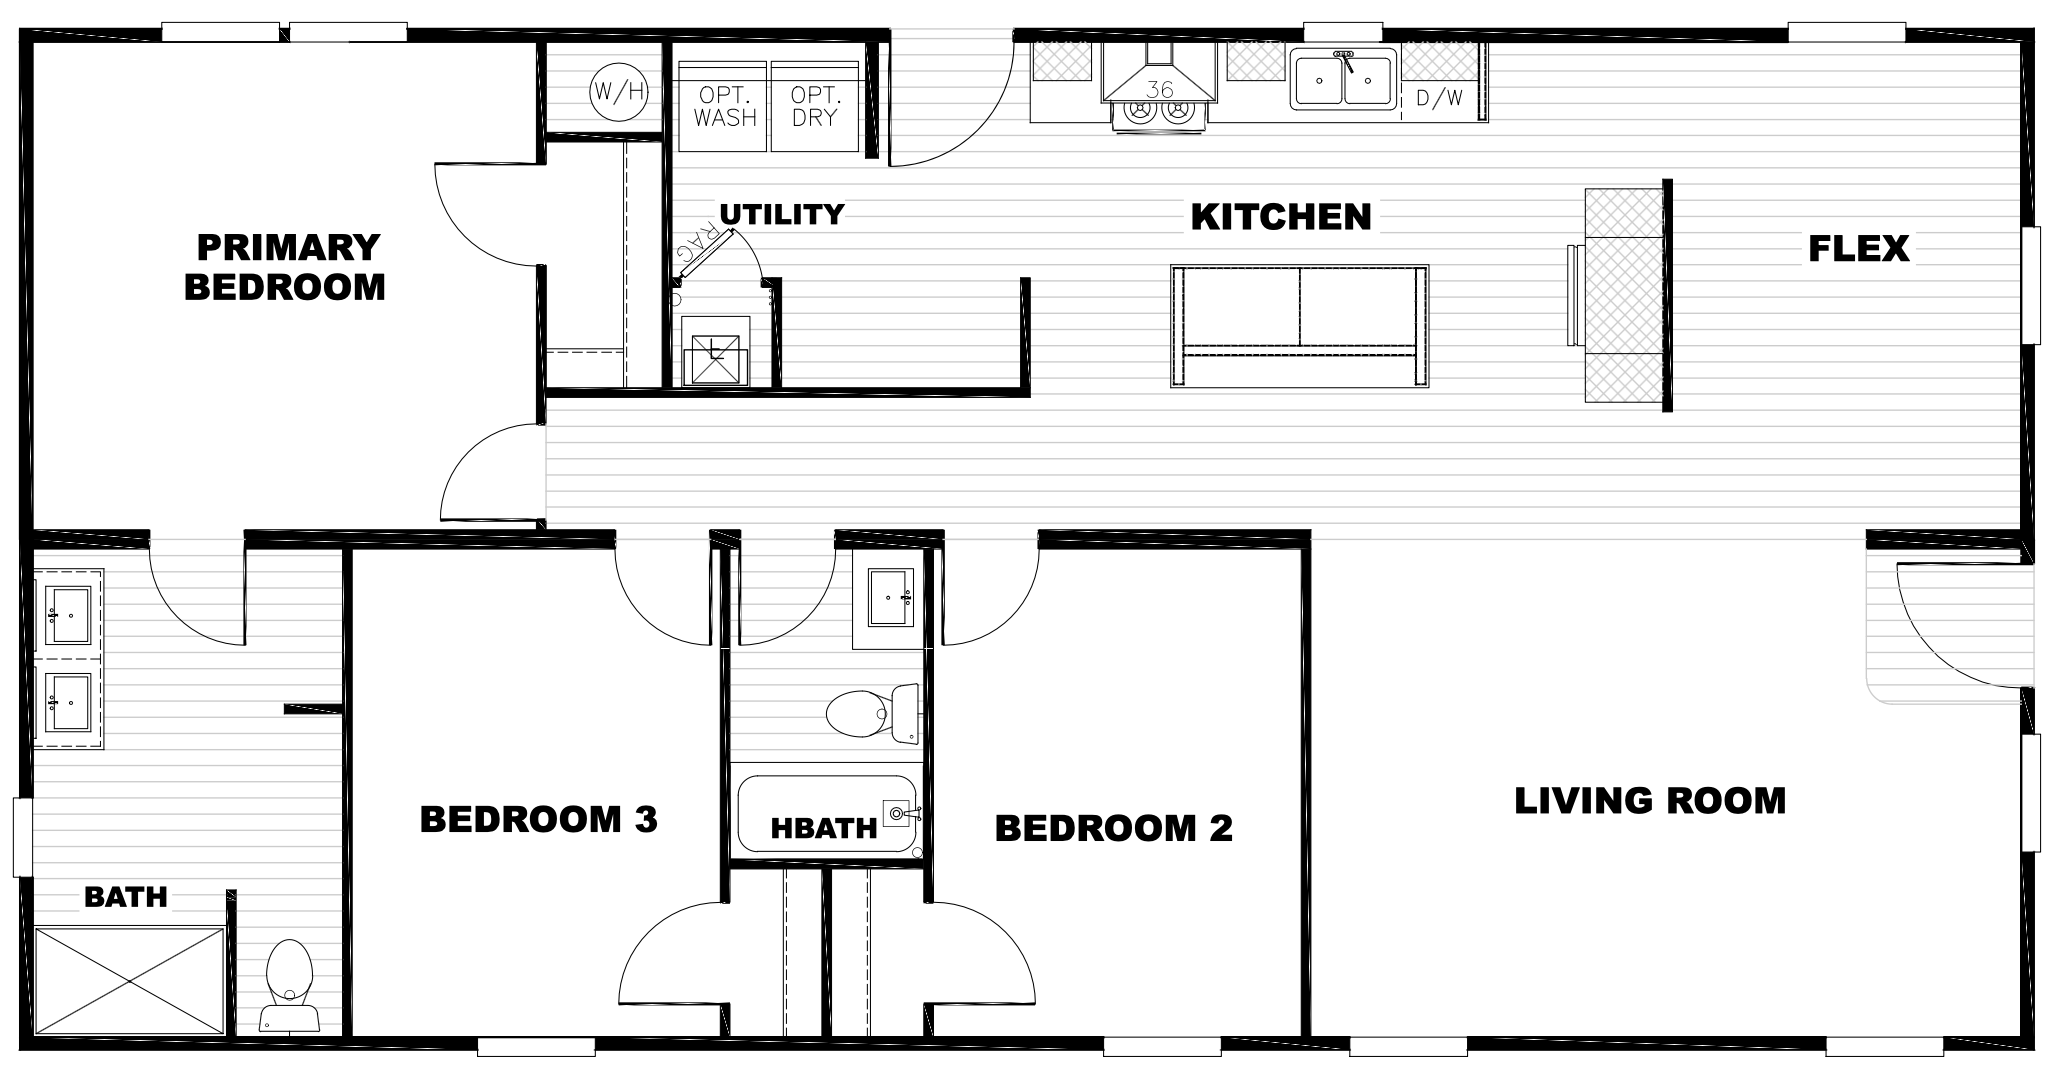 Homes Direct Modular Homes - Model TEM28523A - Floorplan